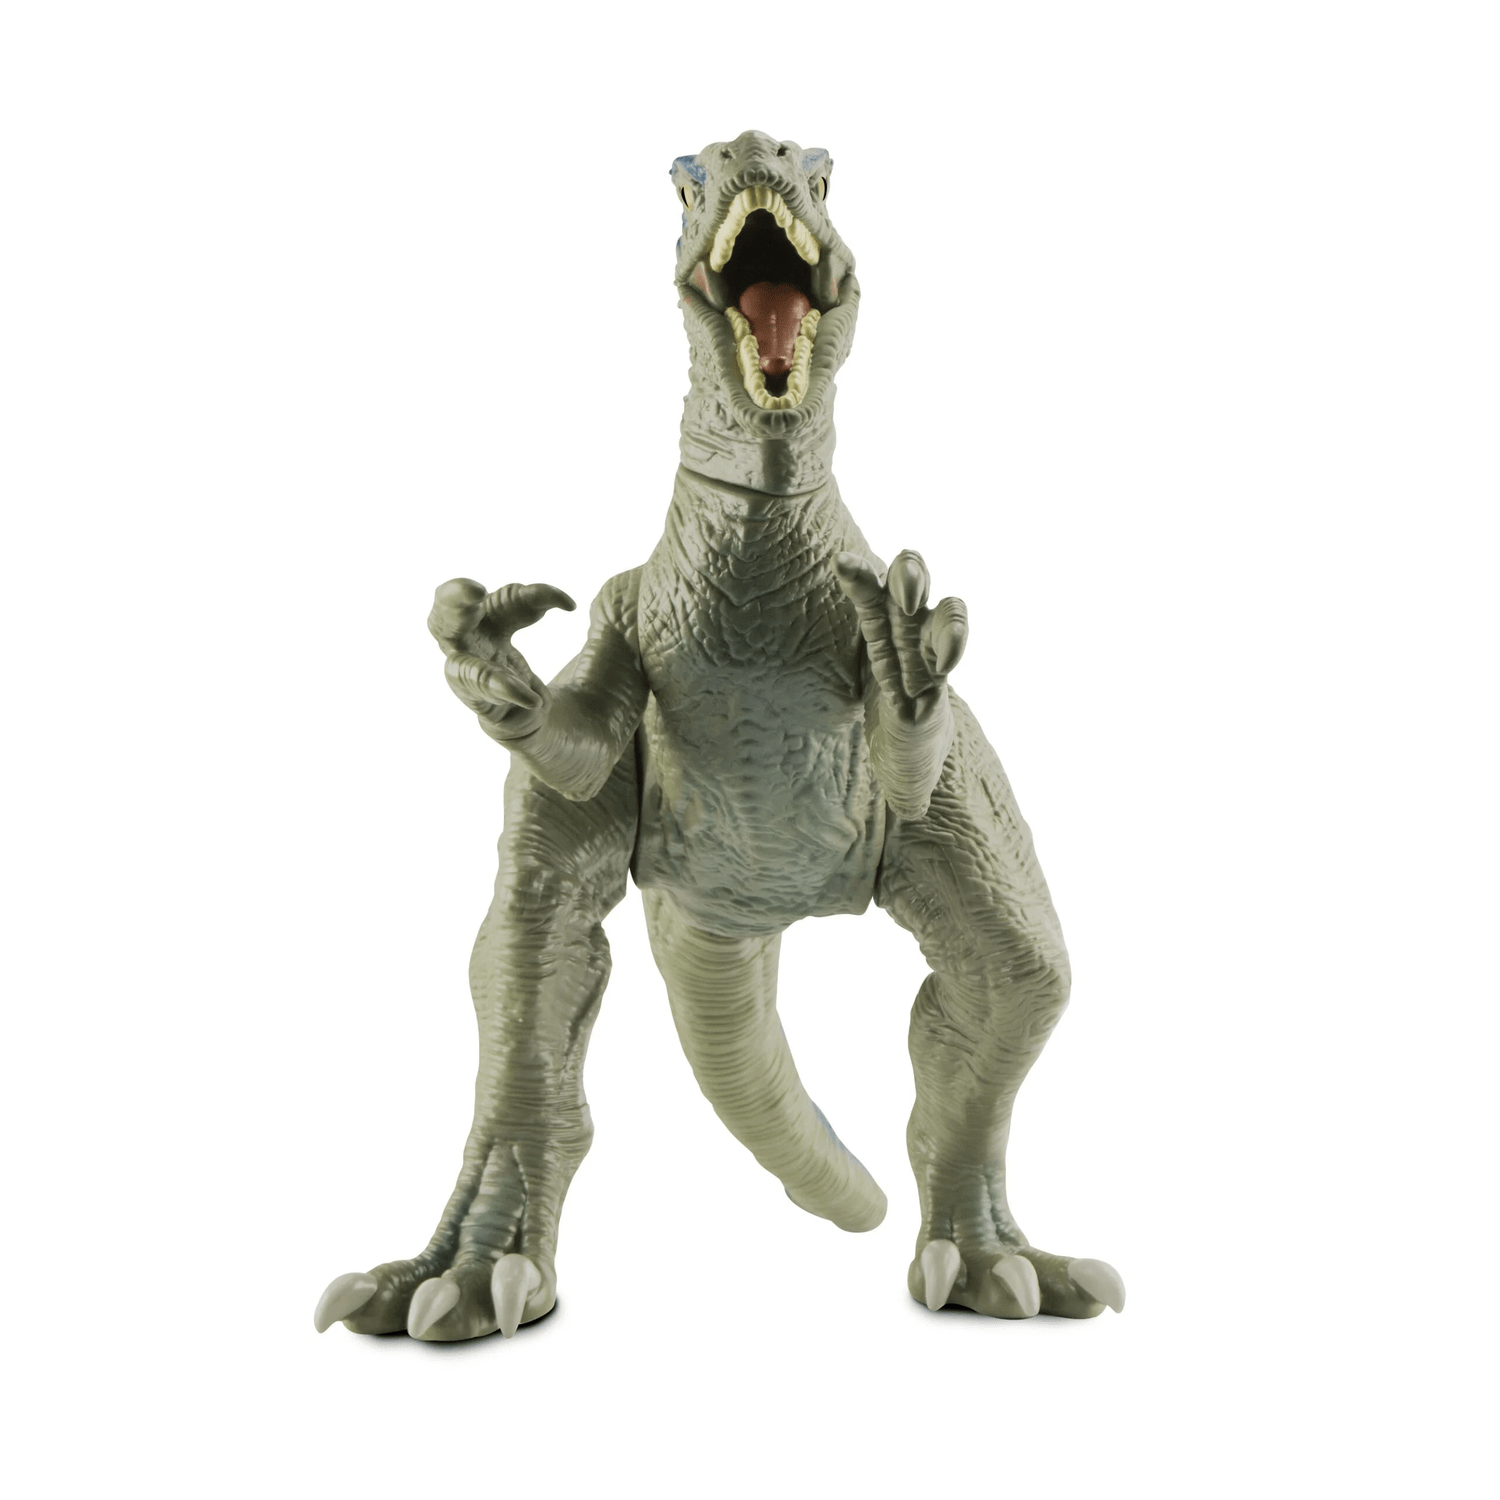 Jurassic World - Quebra Cabeça 100 peças, Indominus - Mimo Play - Mimo Toys